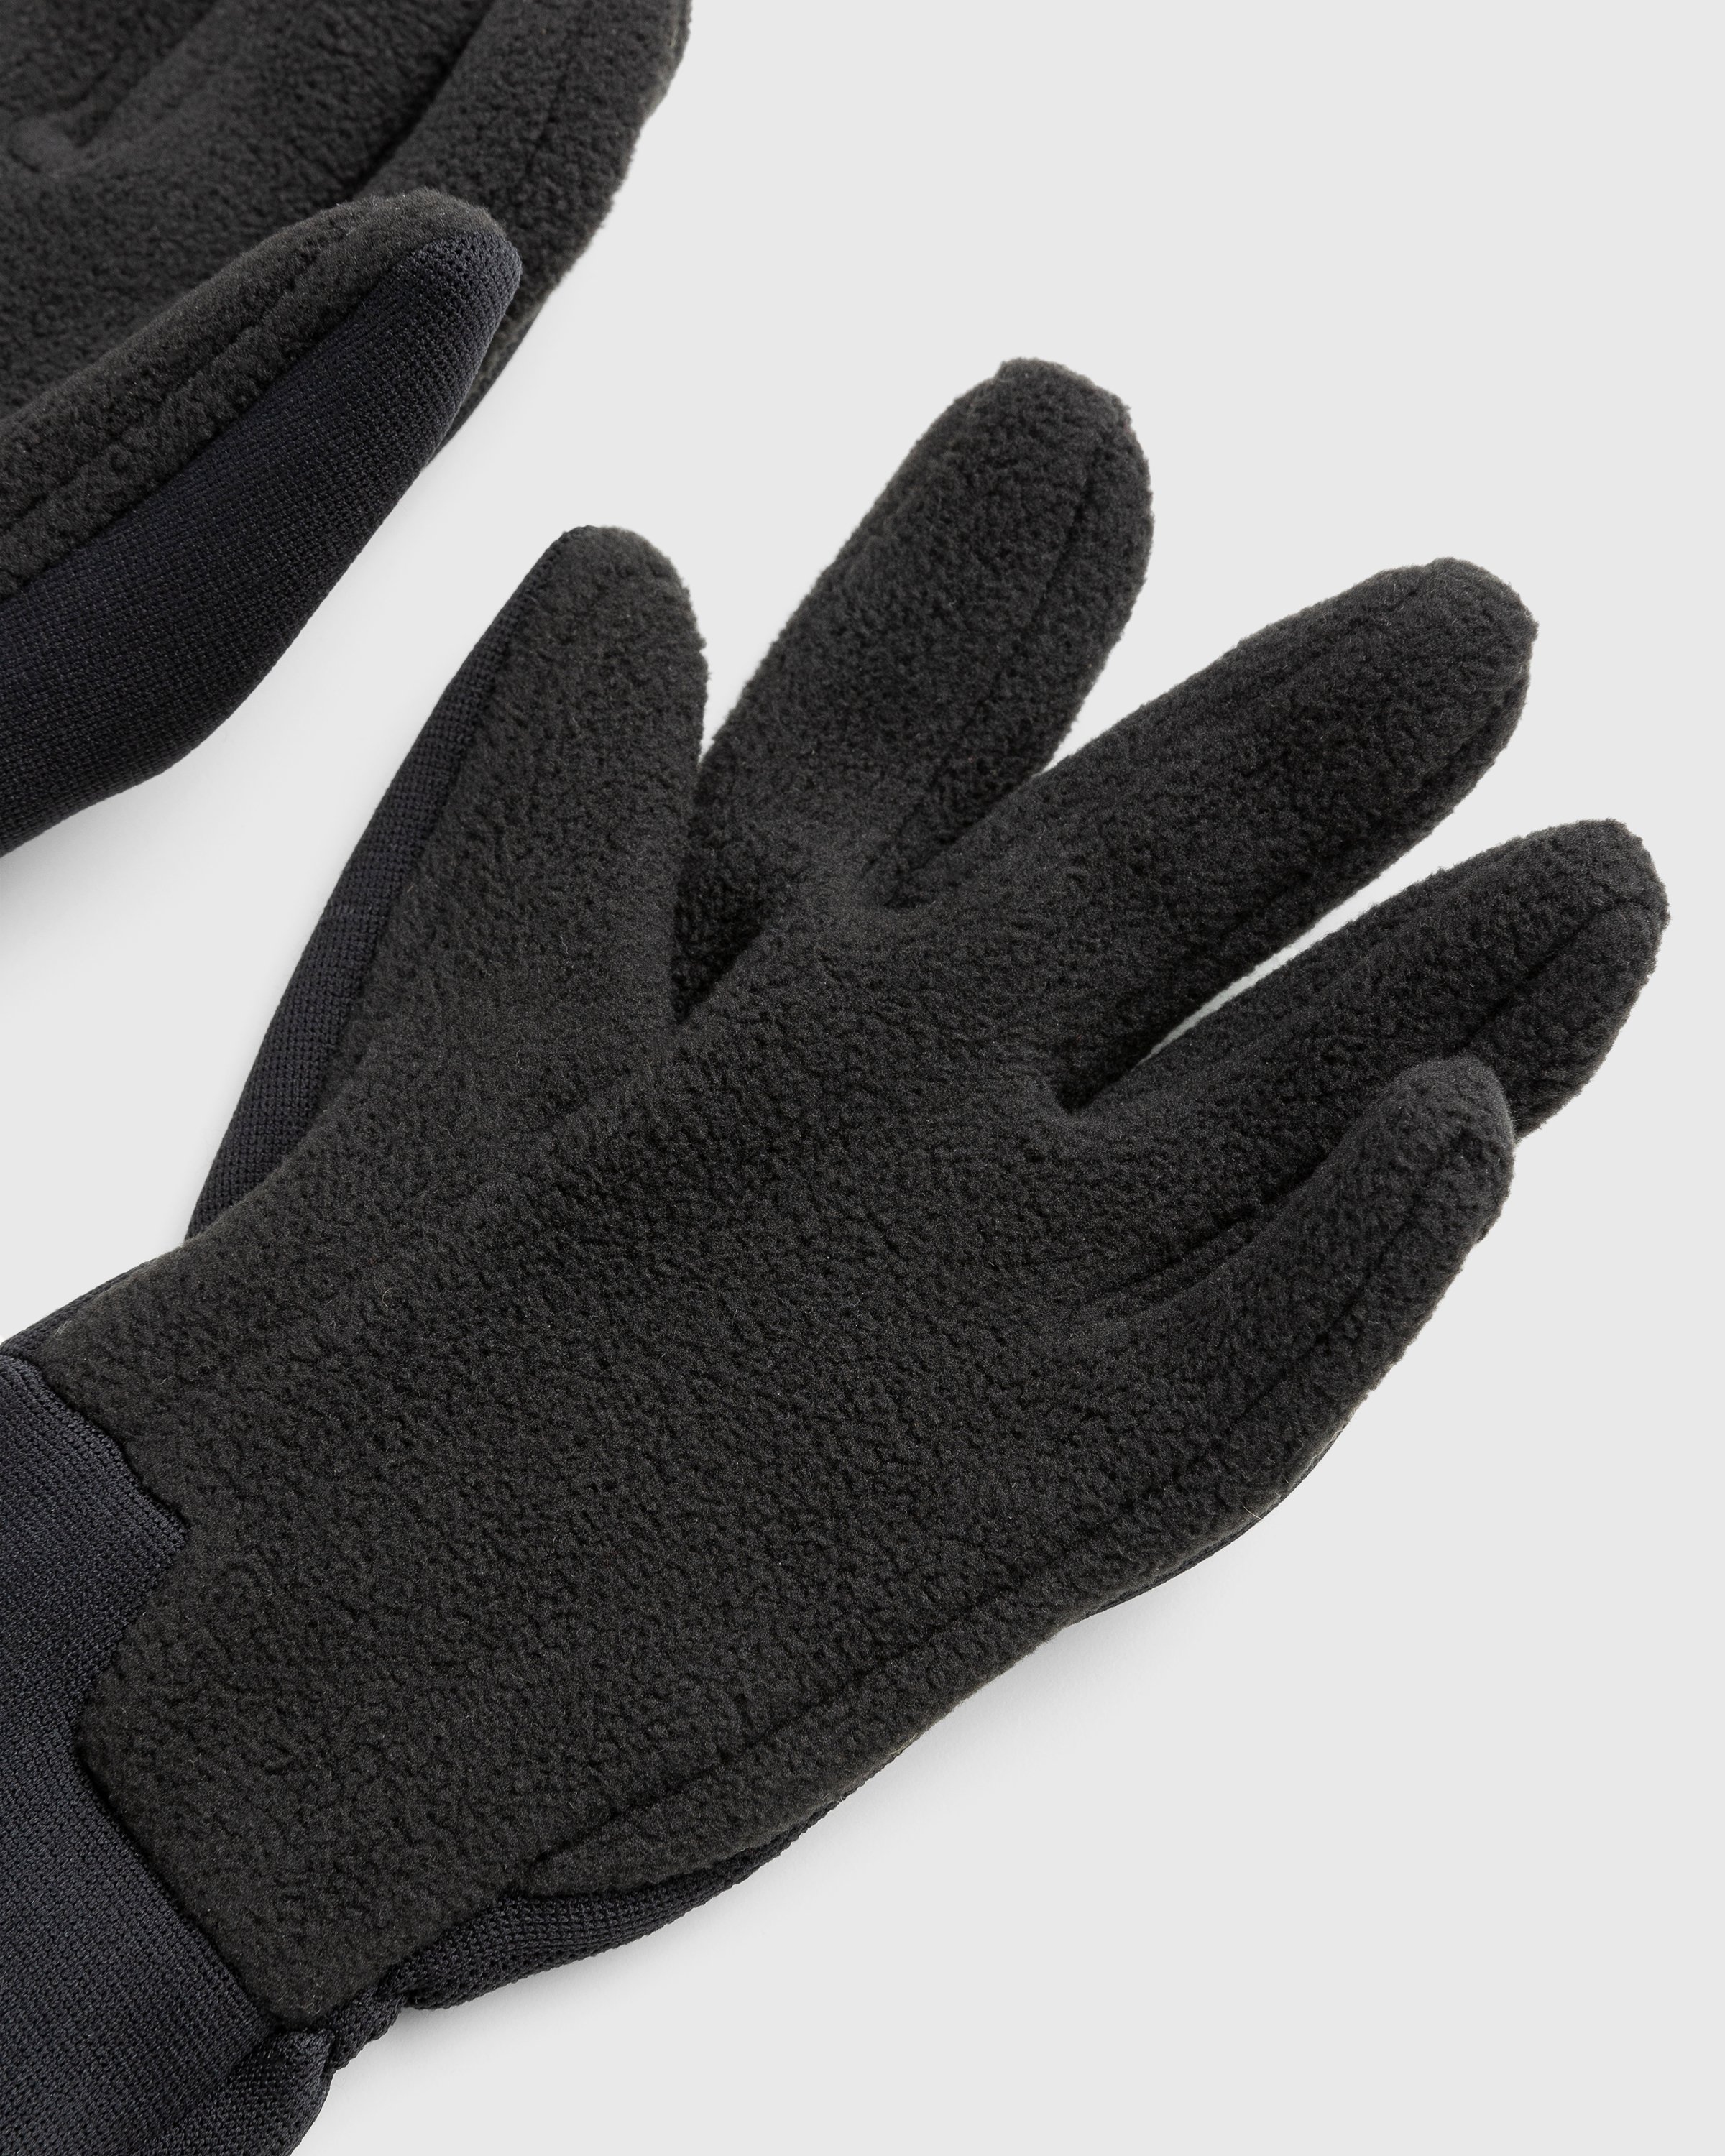 C.P. Company - Seamless Gloves Black - Accessories - Black - Image 4